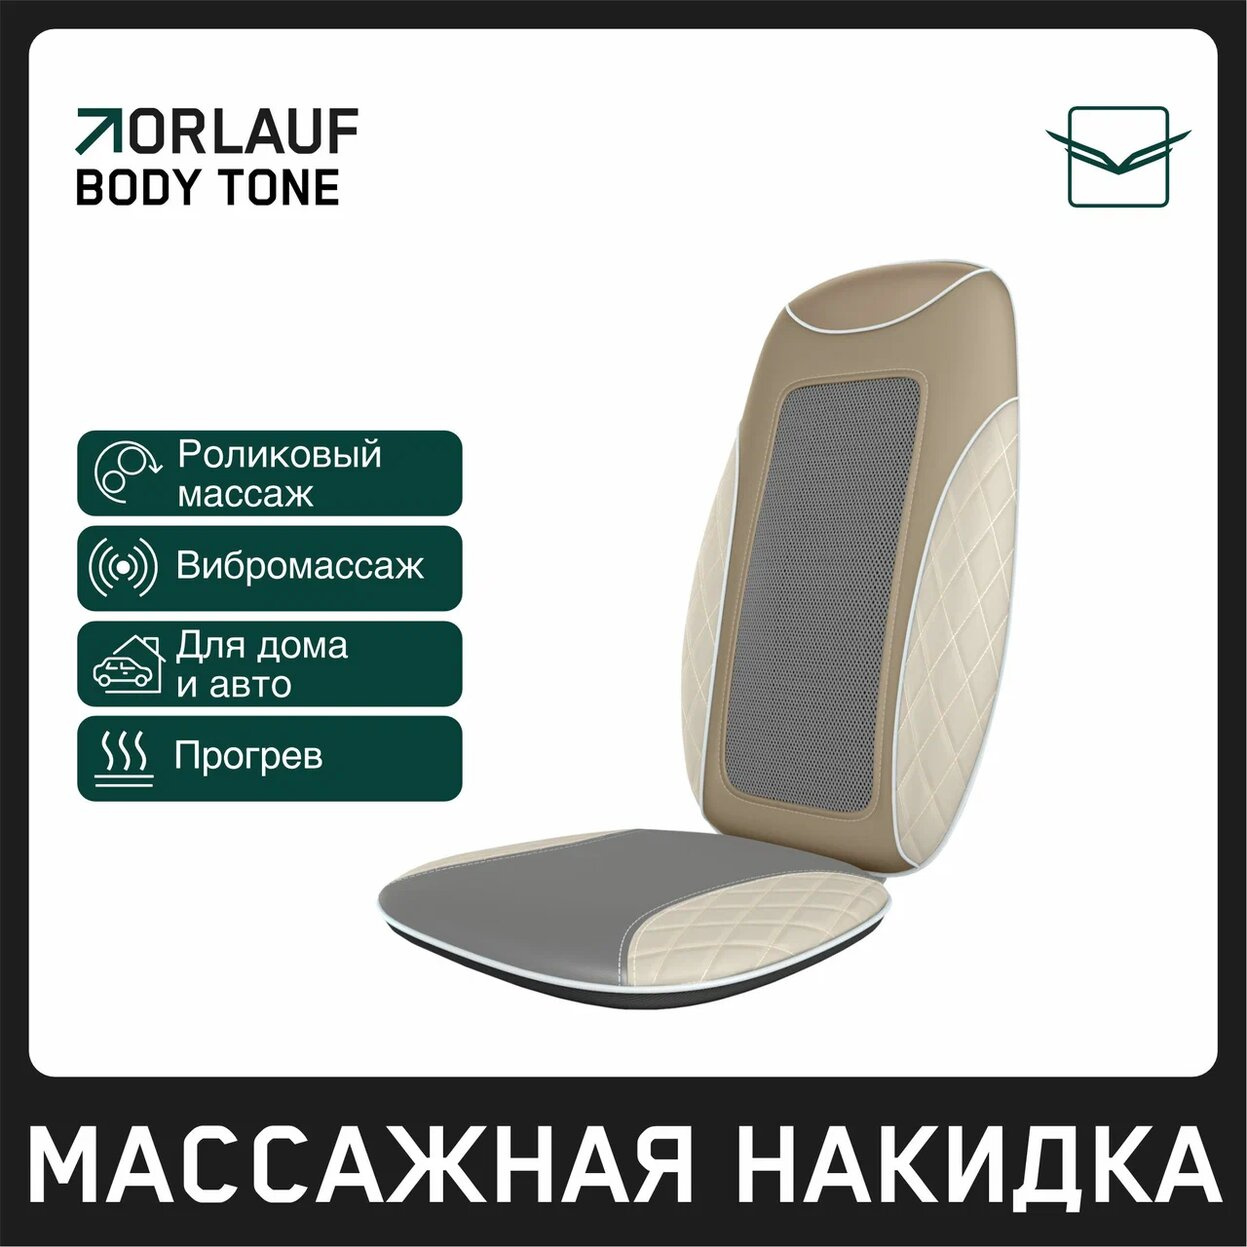 Orlauf Body Tone из каталога спецпредложений в Санкт-Петербурге по цене 15400 ₽